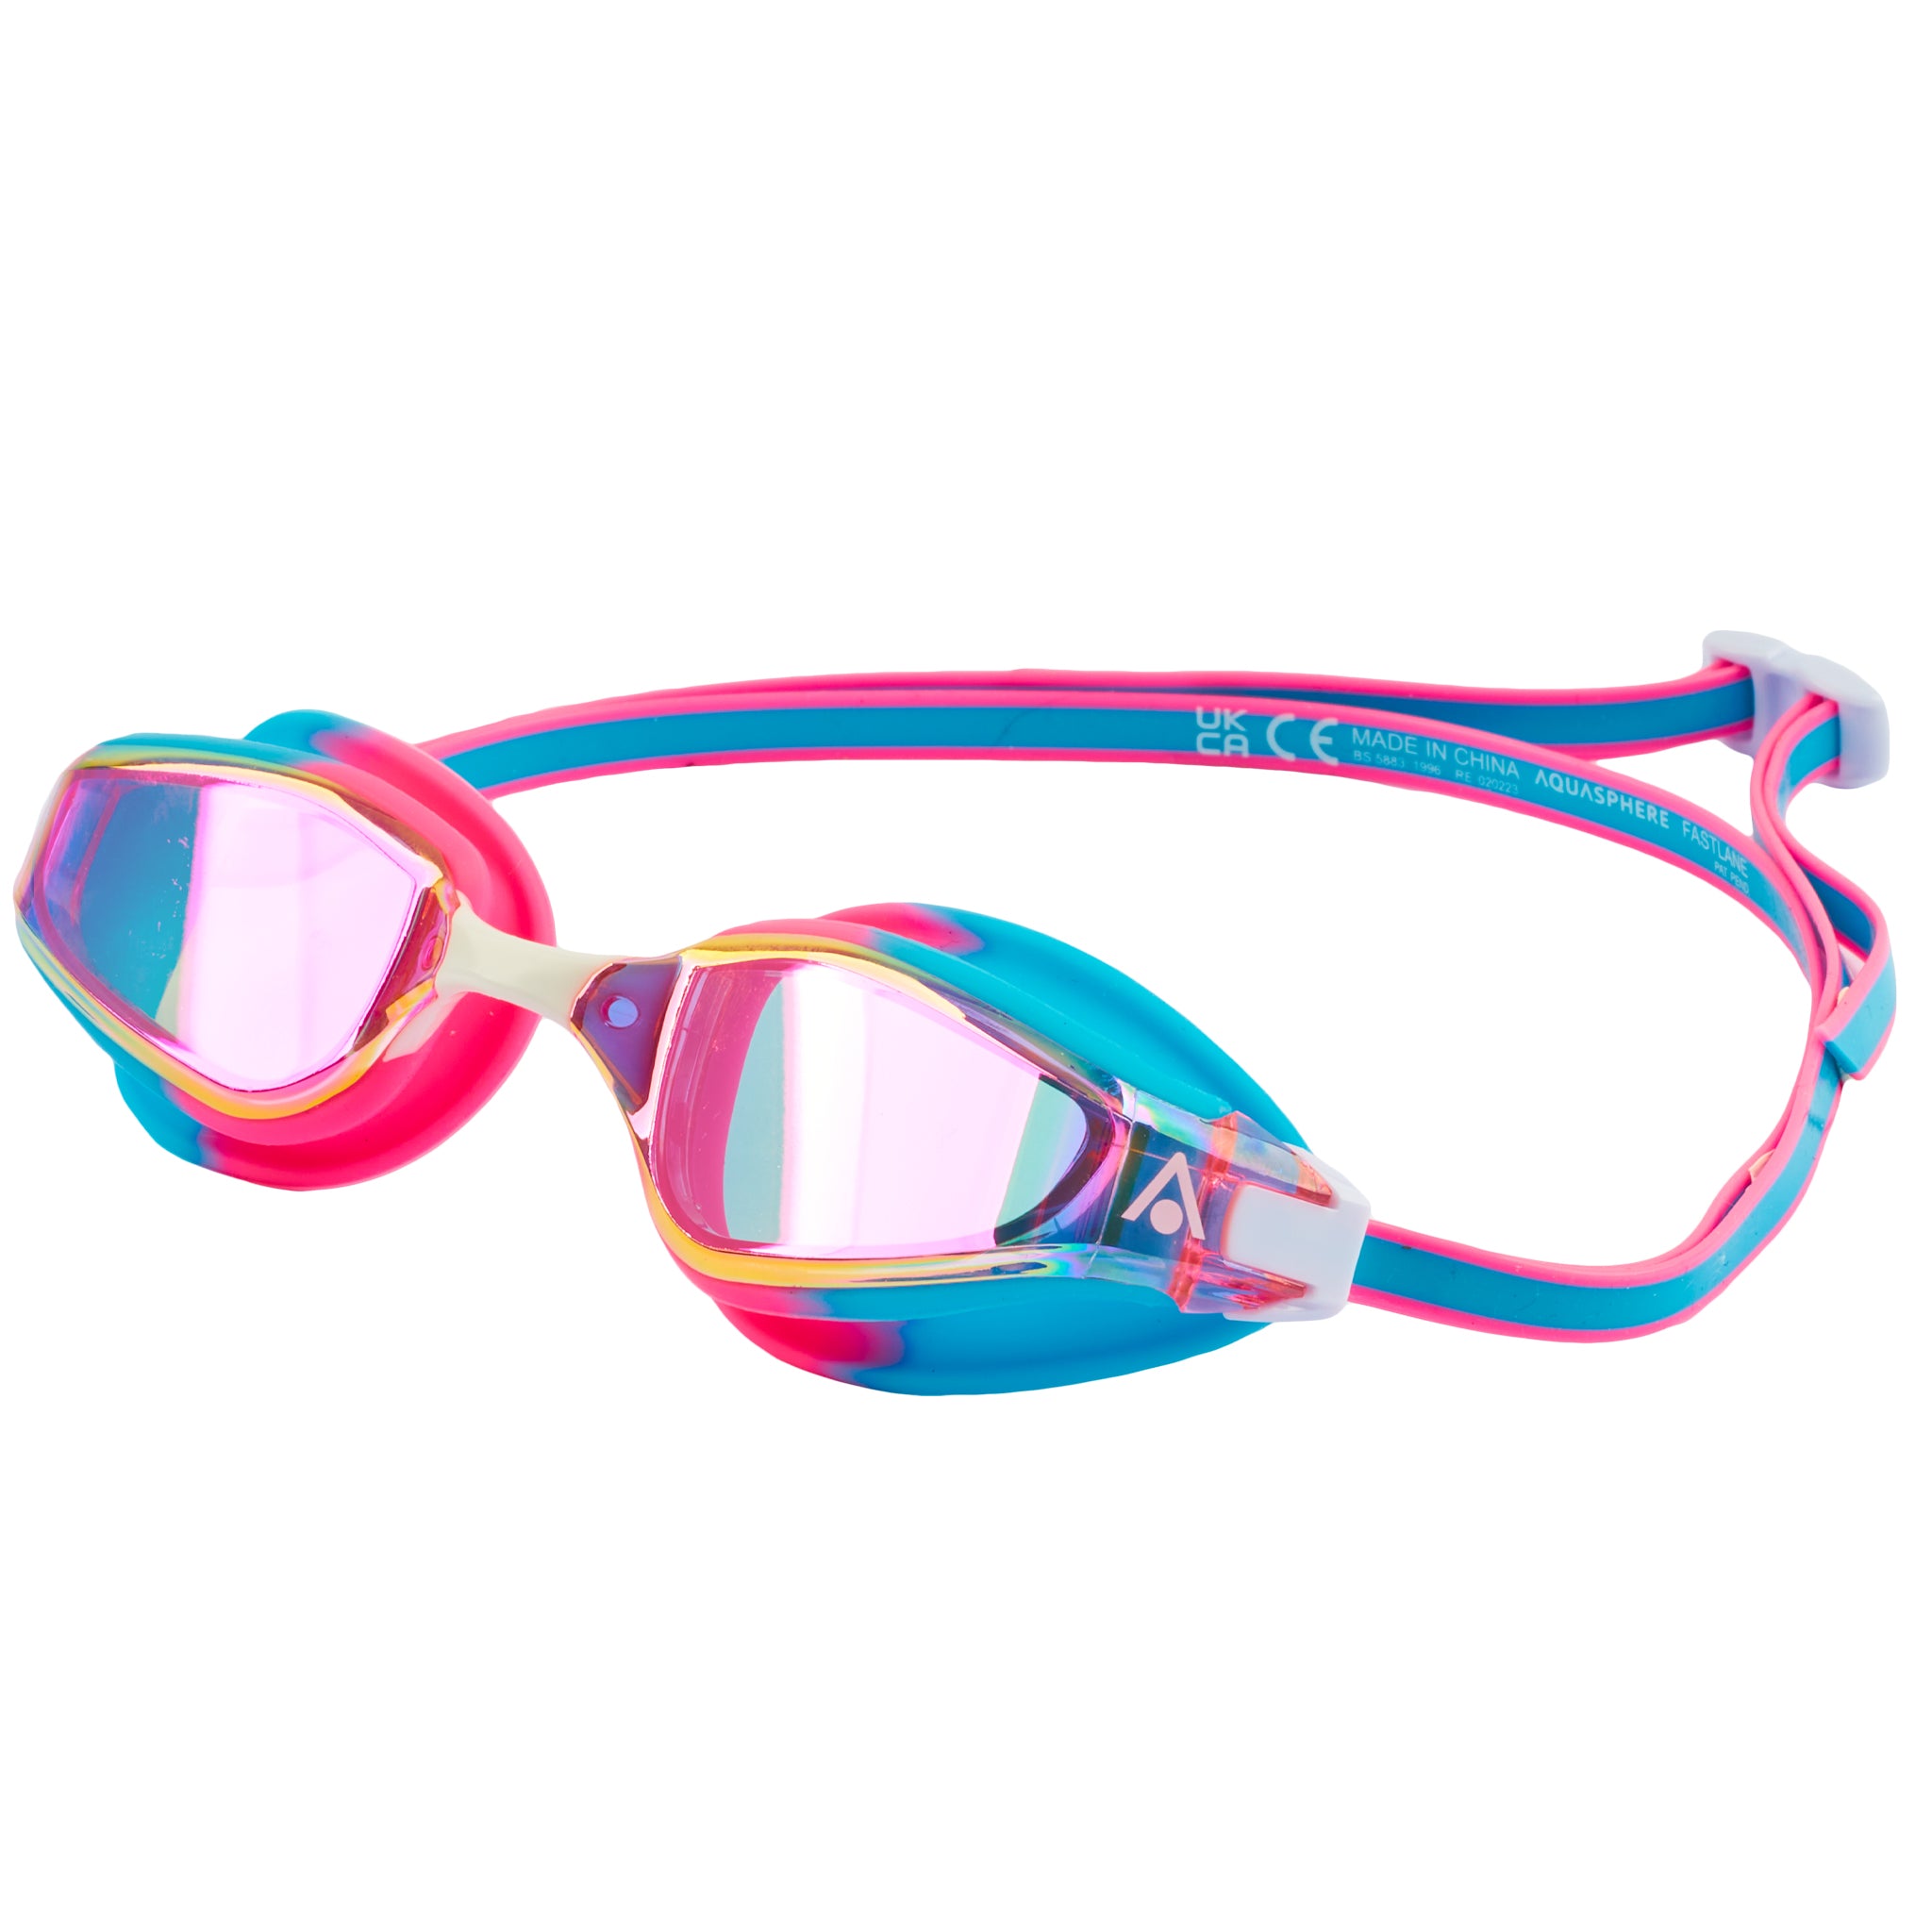 Aquasphere Fastlane Goggles LTD EDITION Pink Iridescent Mirrored Lenses